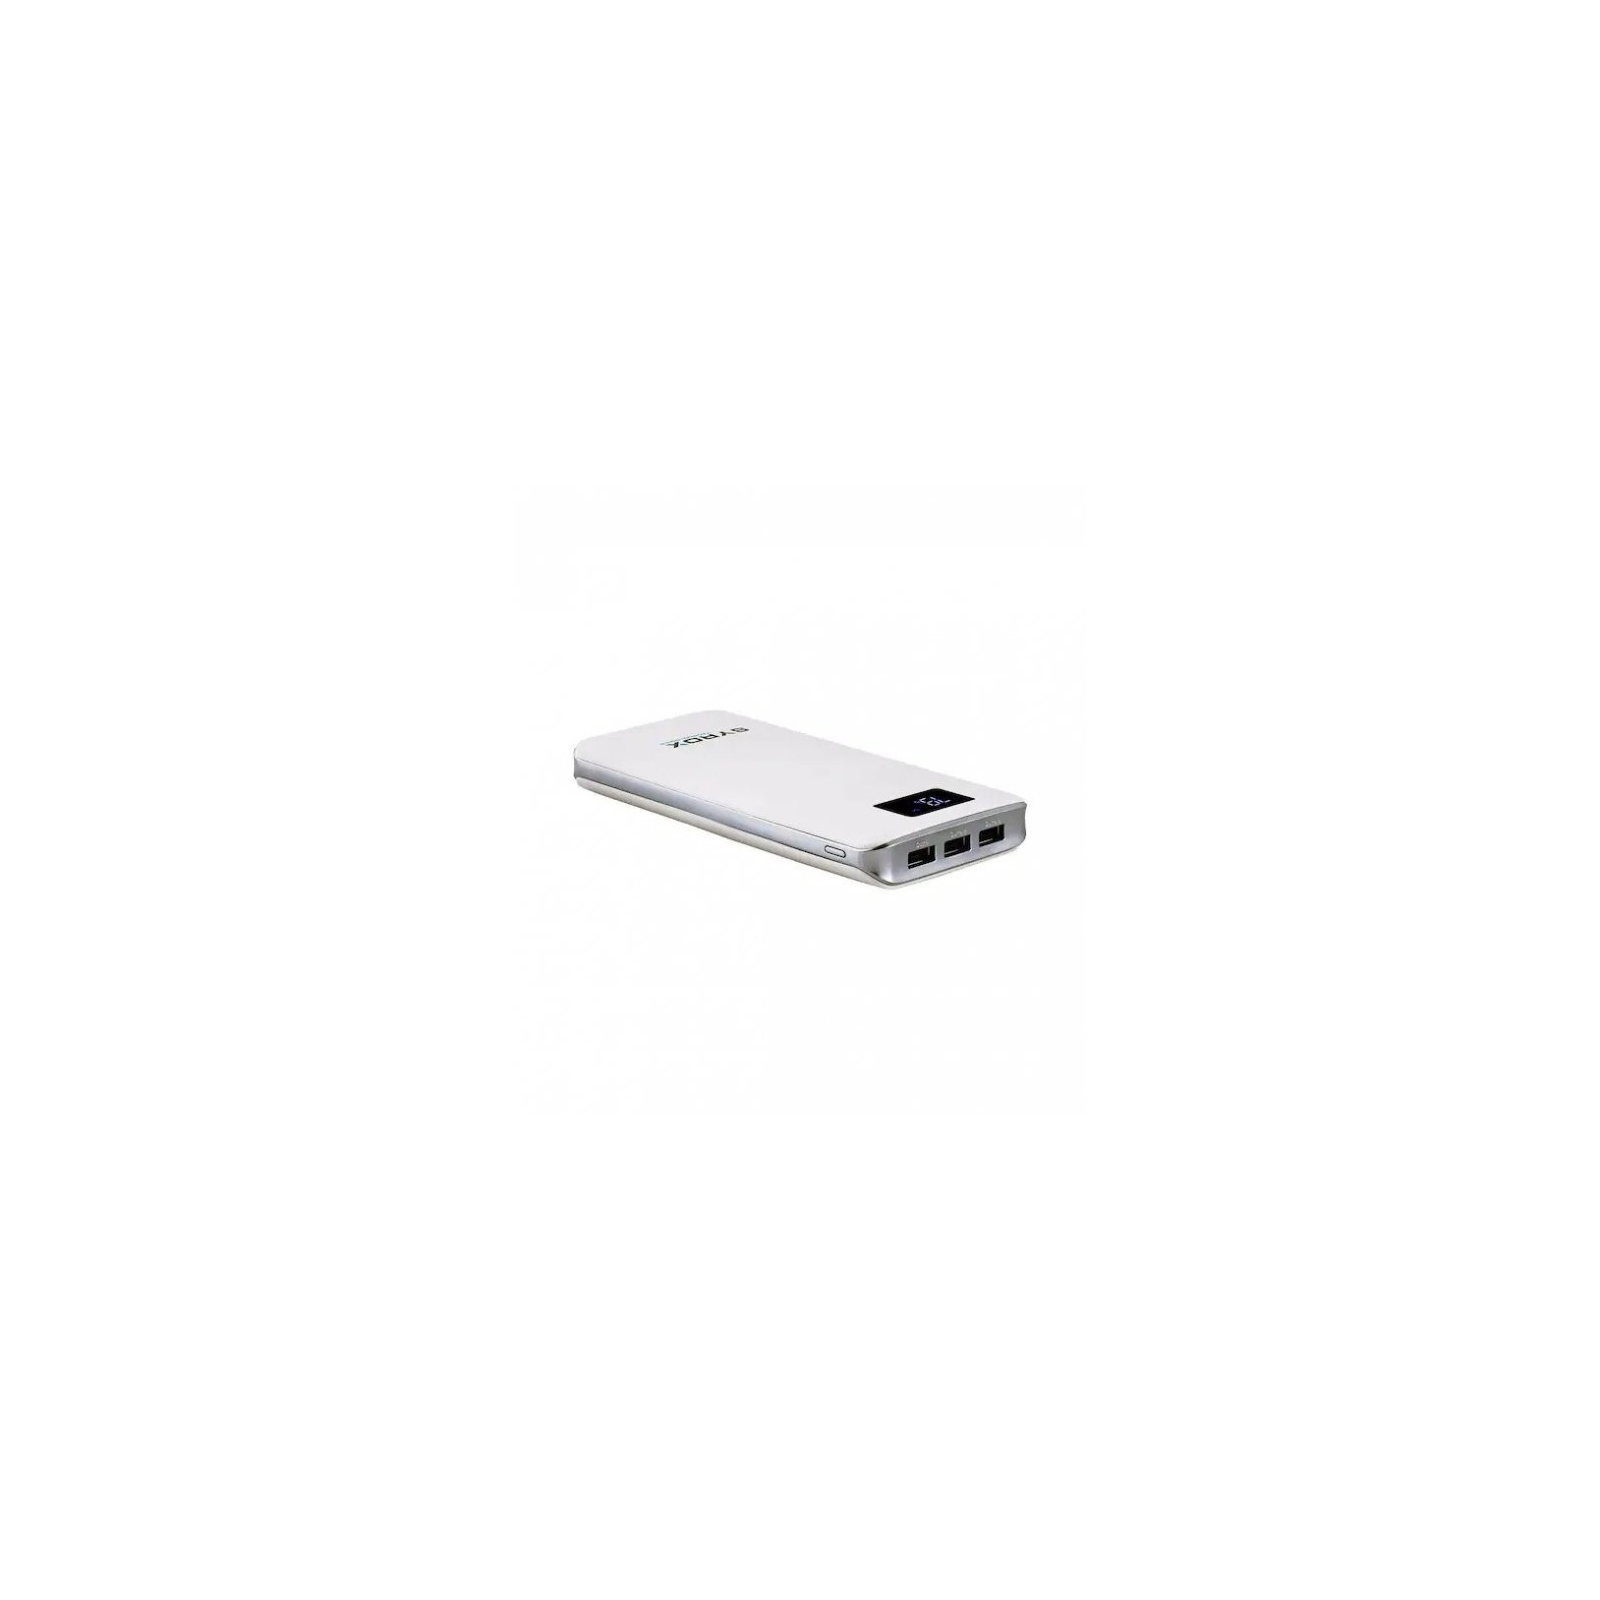 Батарея универсальная Syrox PB107 20000mAh, USB*2, Micro USB, Type C, white (PB107_white) изображение 3